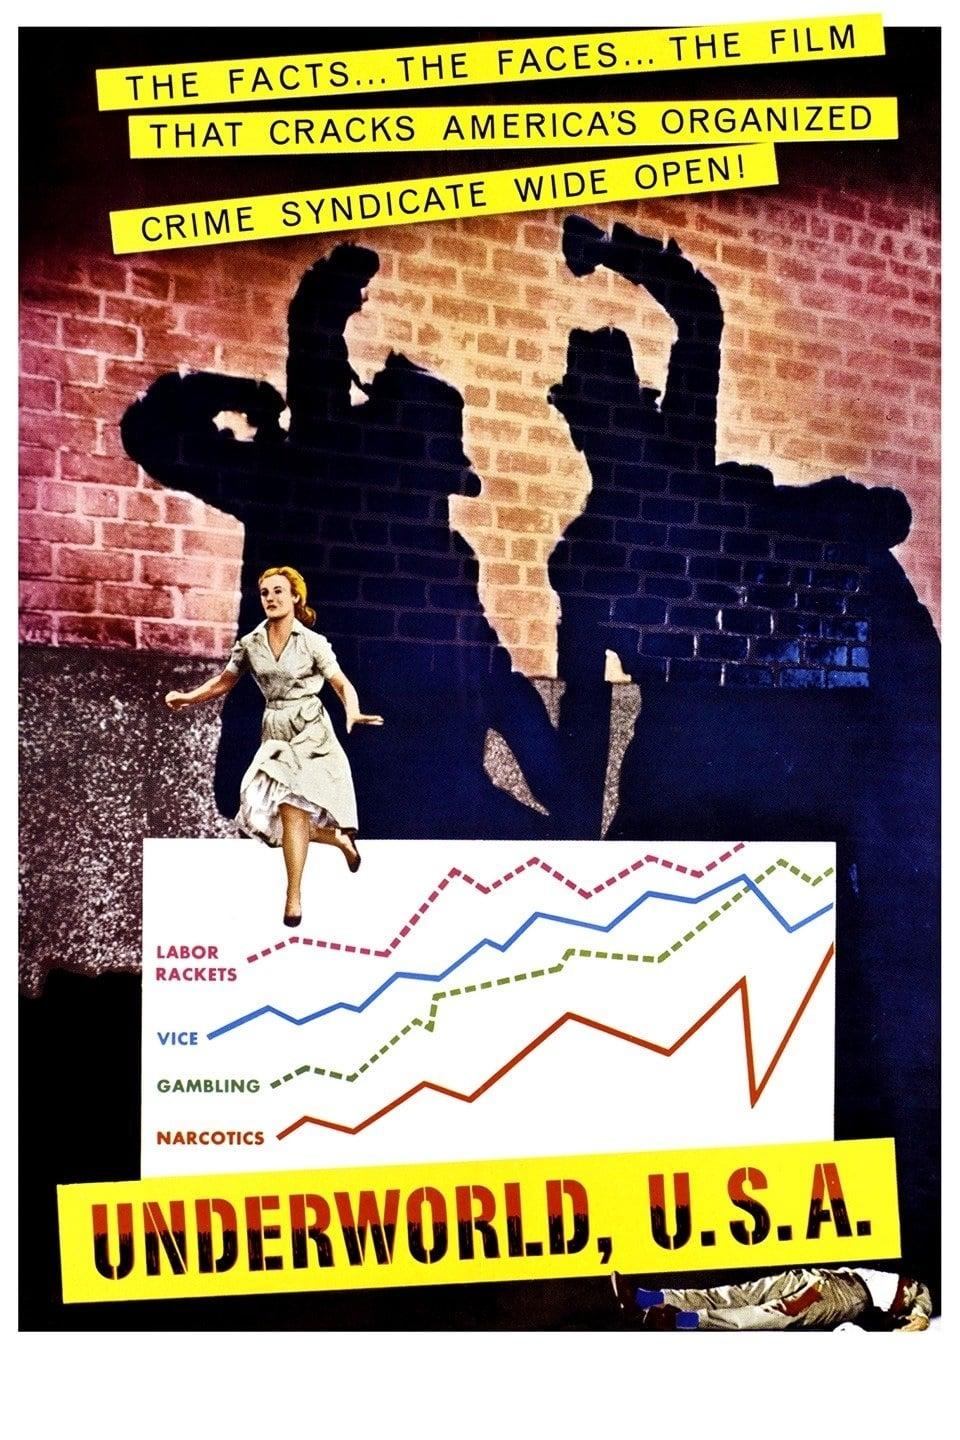 Underworld U.S.A. poster